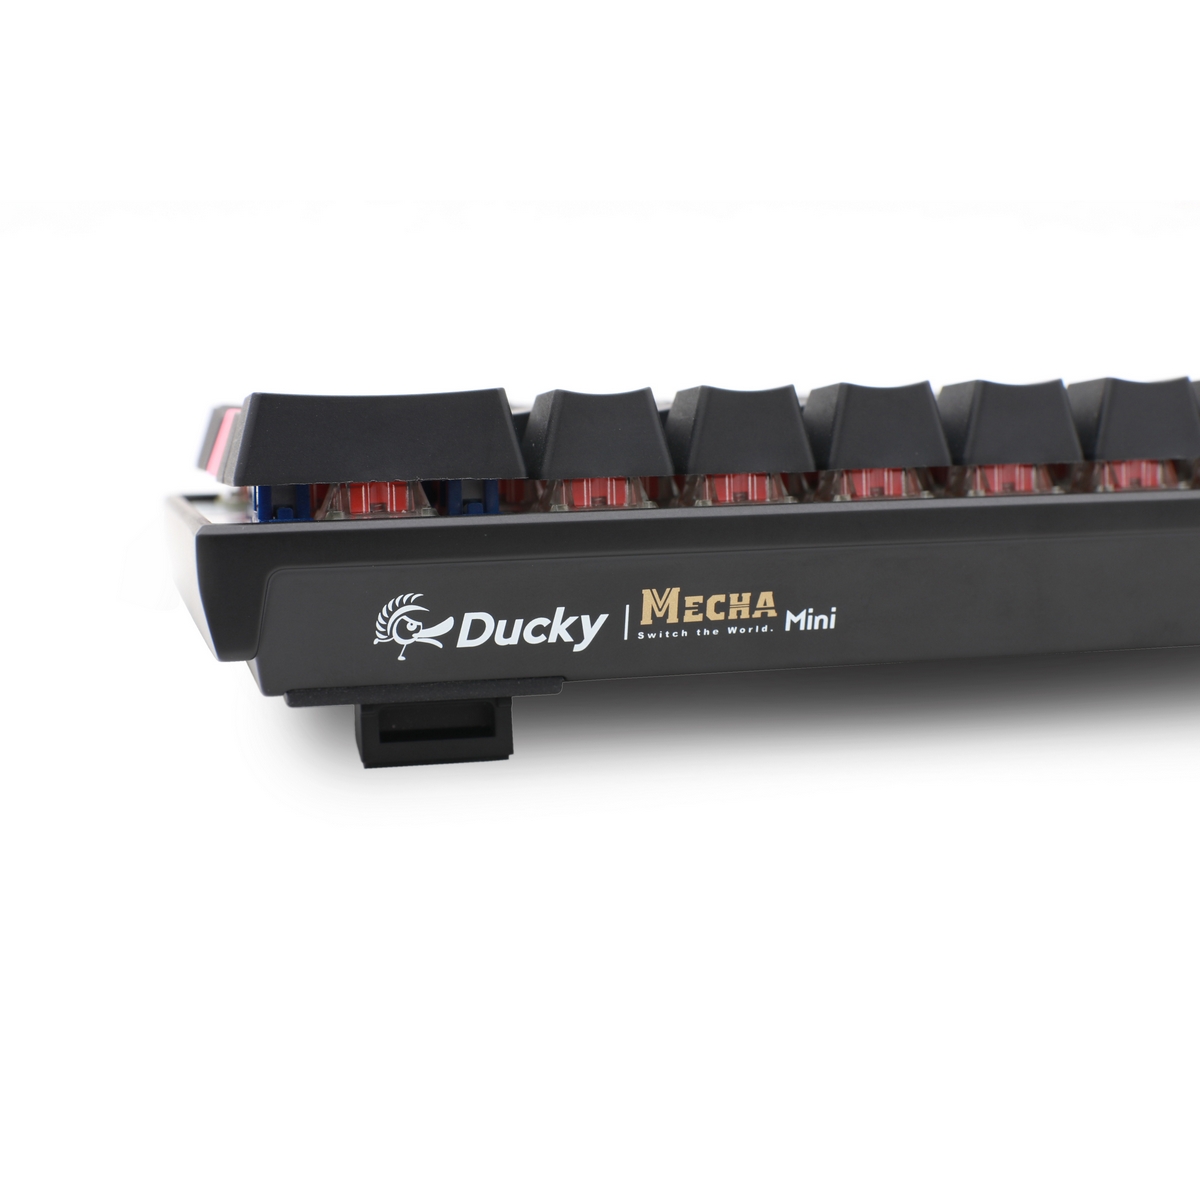 Ducky - Ducky Mecha Mini 60% RGB USB Mechanical Gaming Keyboard - Cherry MX Black UK Layout